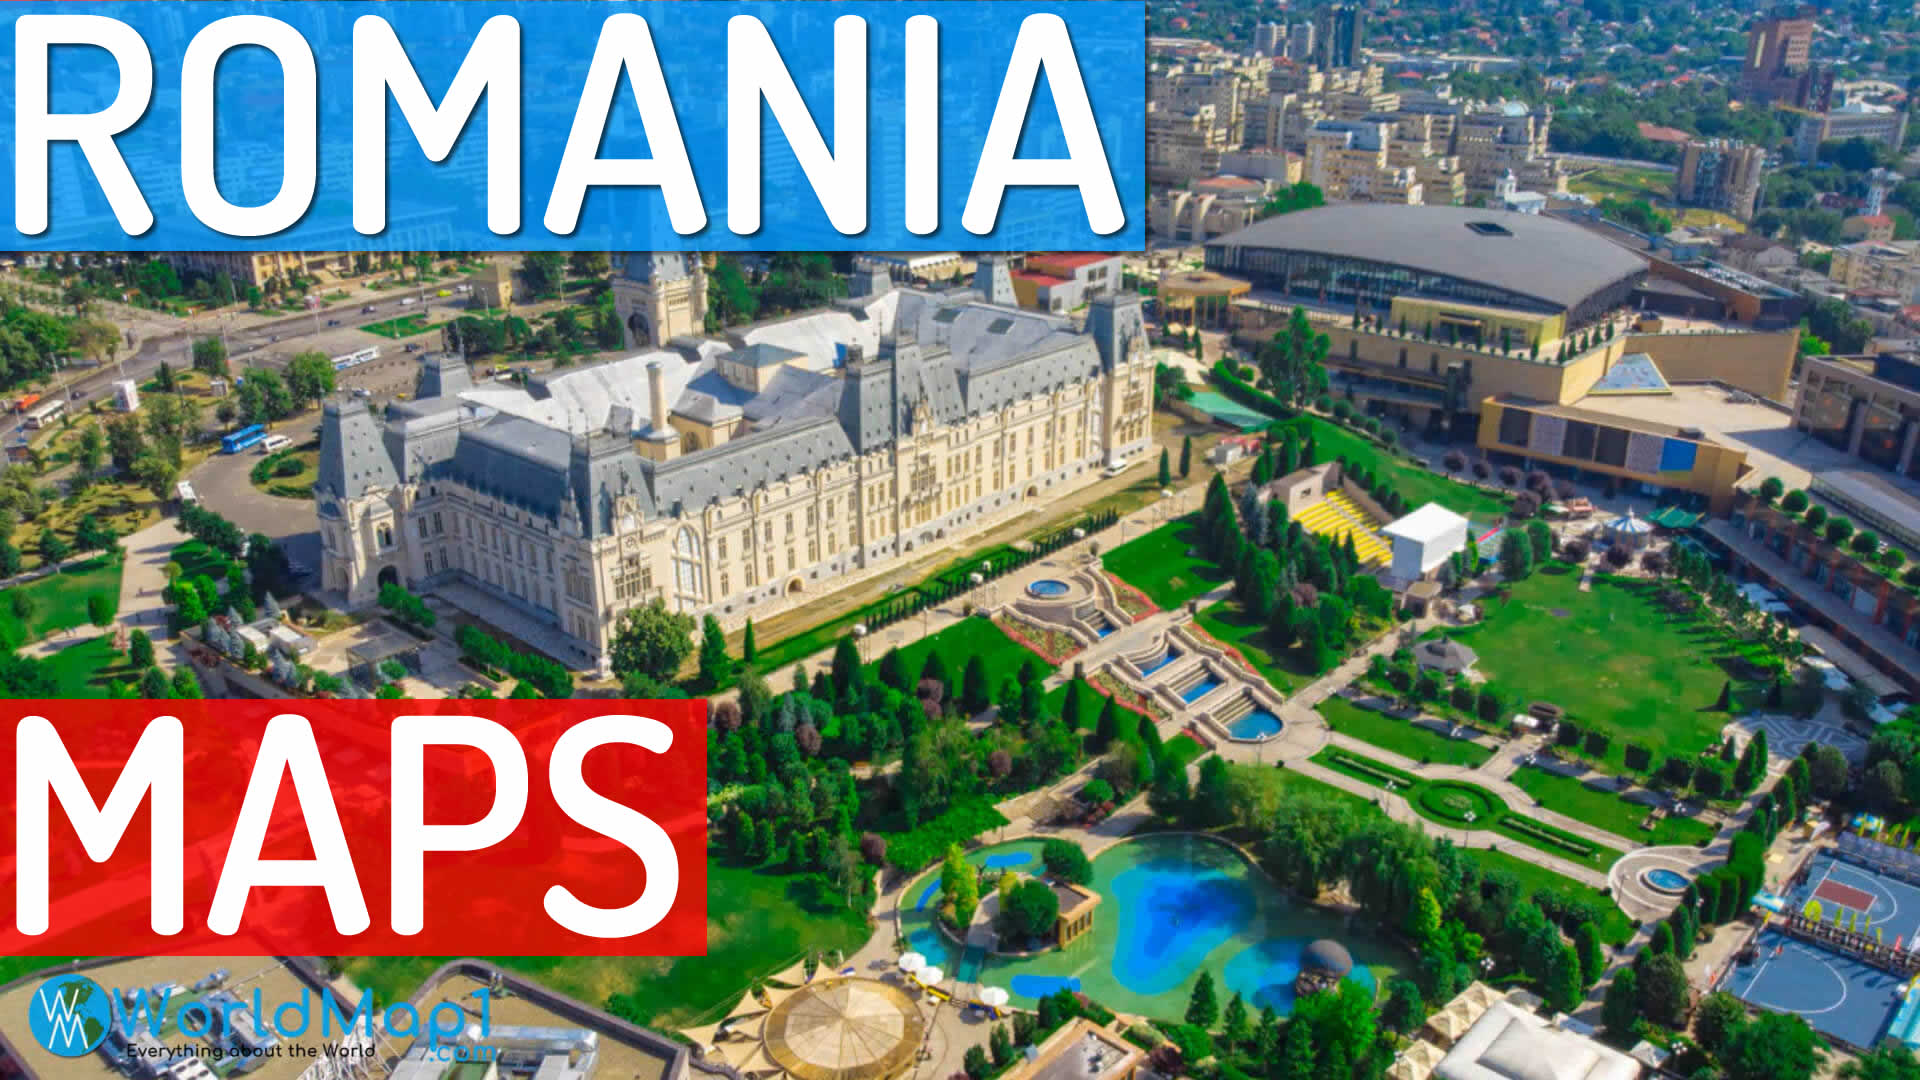 Romania Maps